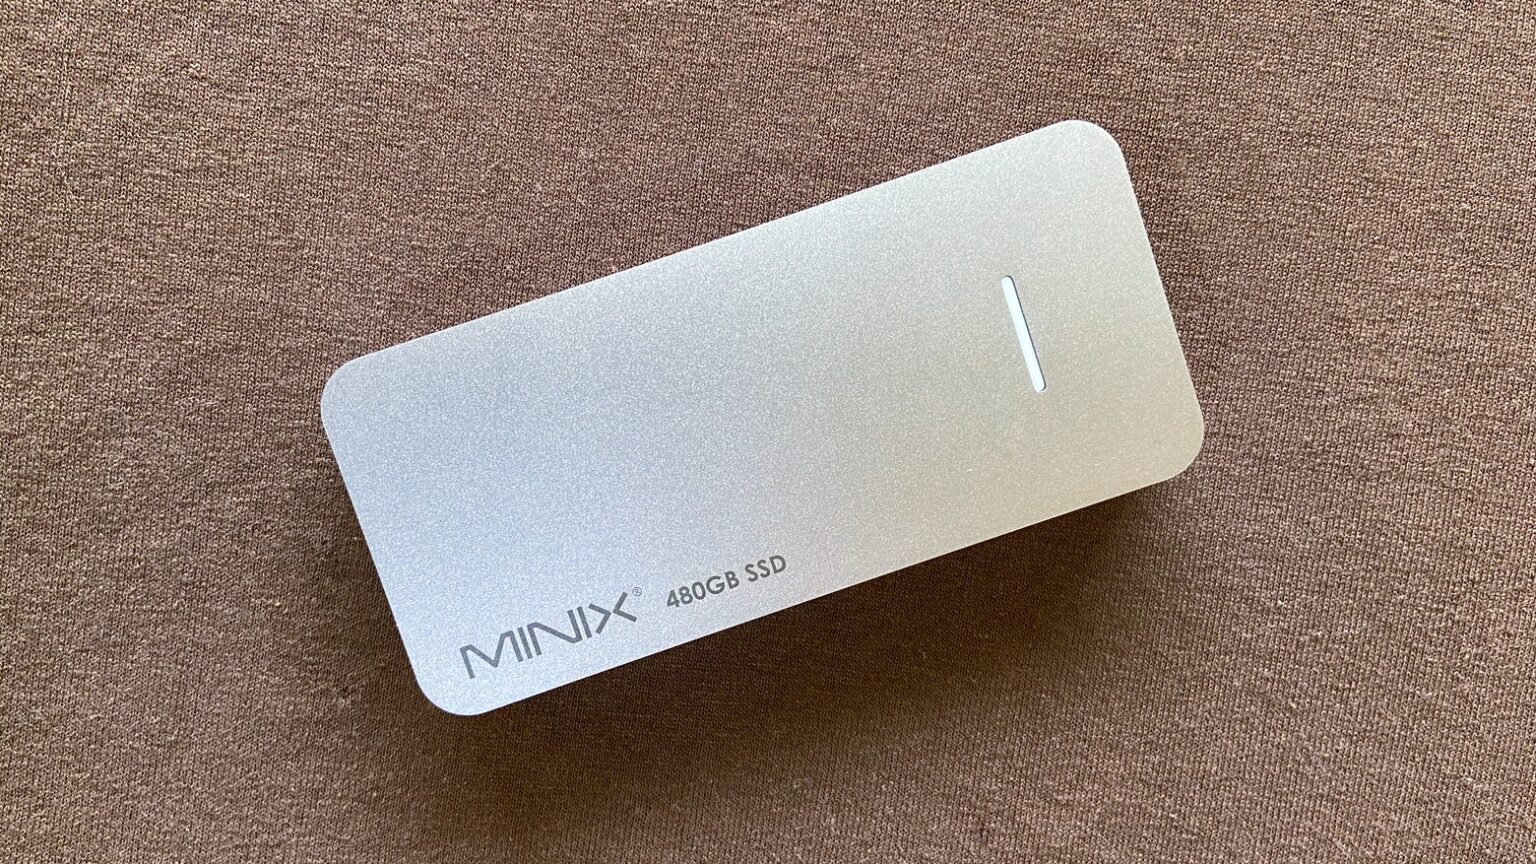 Minix Neo Storage Plus review